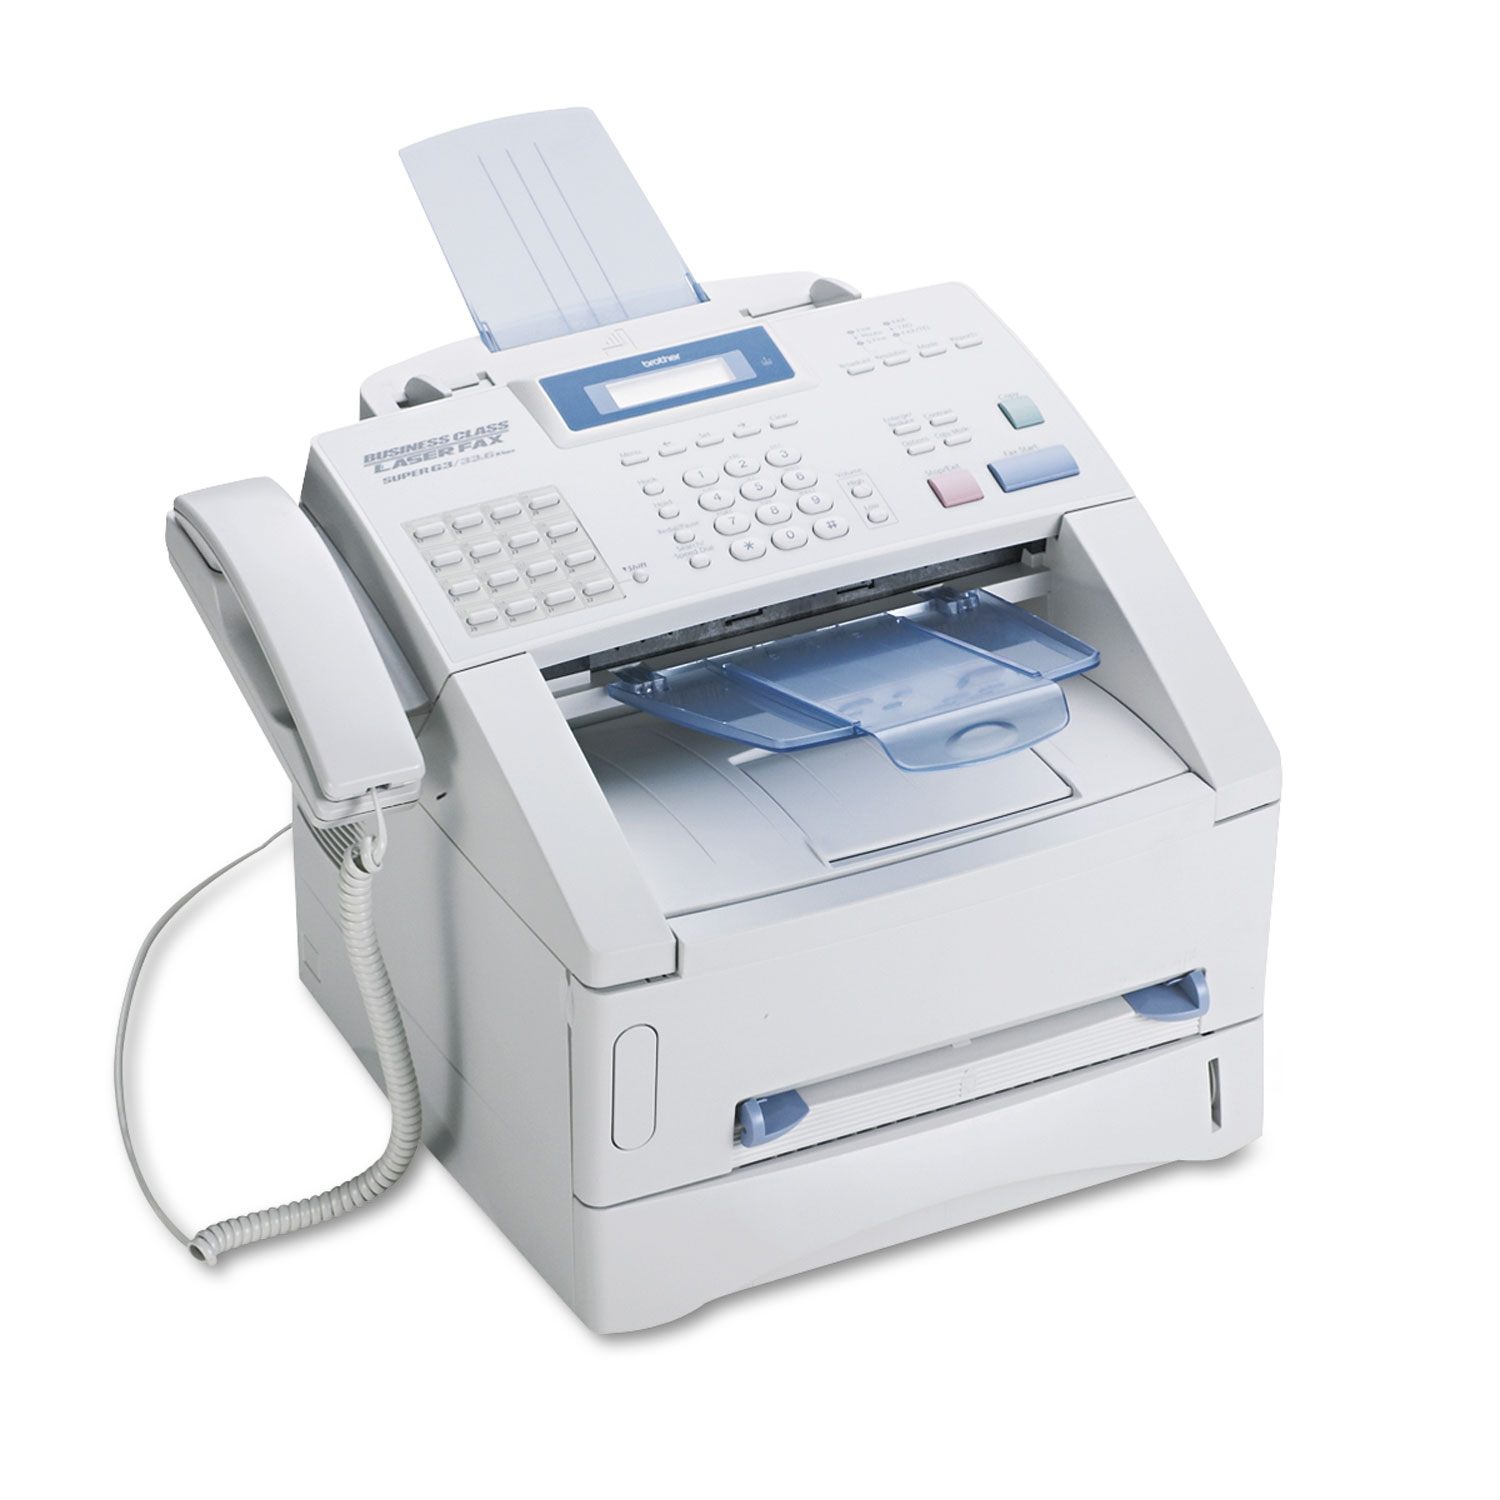 intelliFAX-4750e Business-Class Laser Fax Machine, Copy/Fax/Print